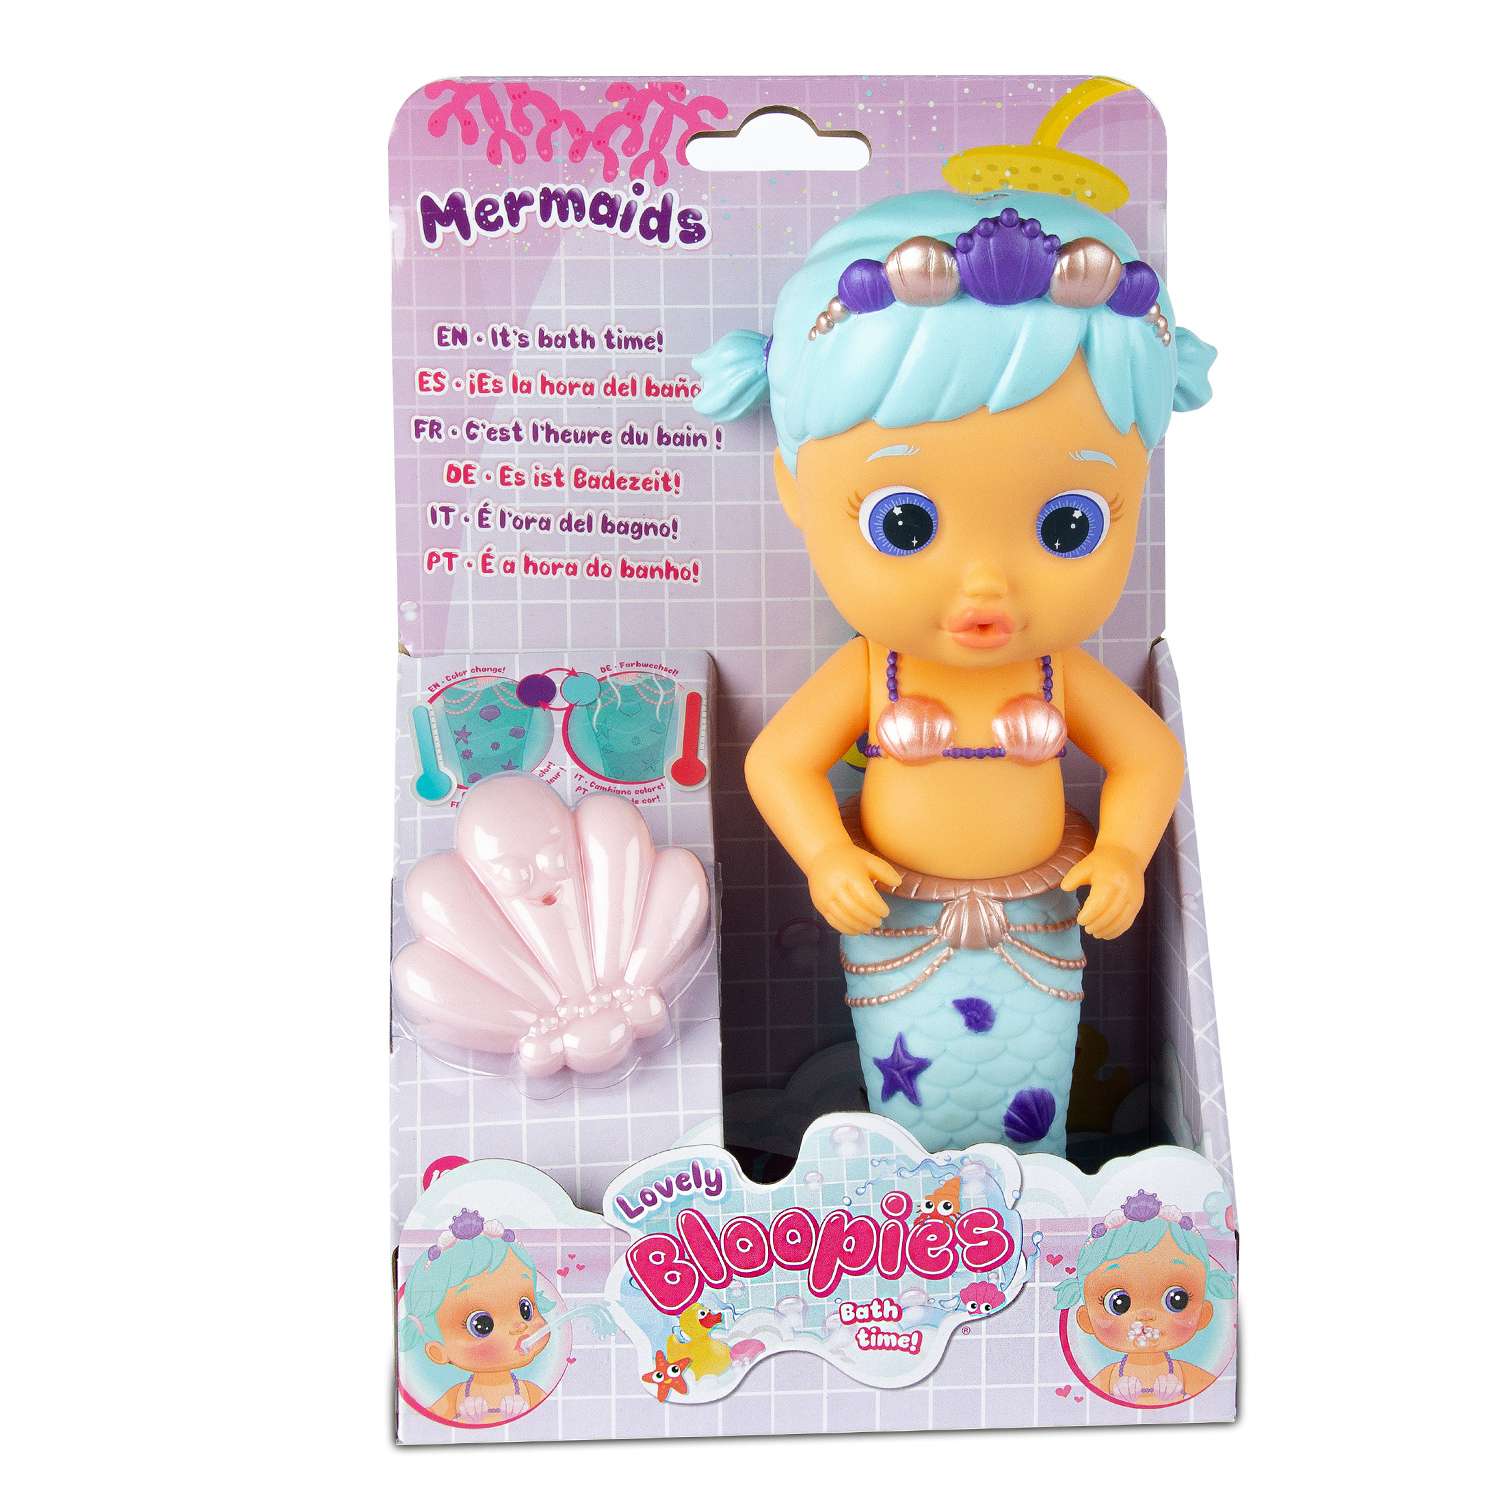 Кукла IMC Toys Bloopies для купания 99630 - фото 2